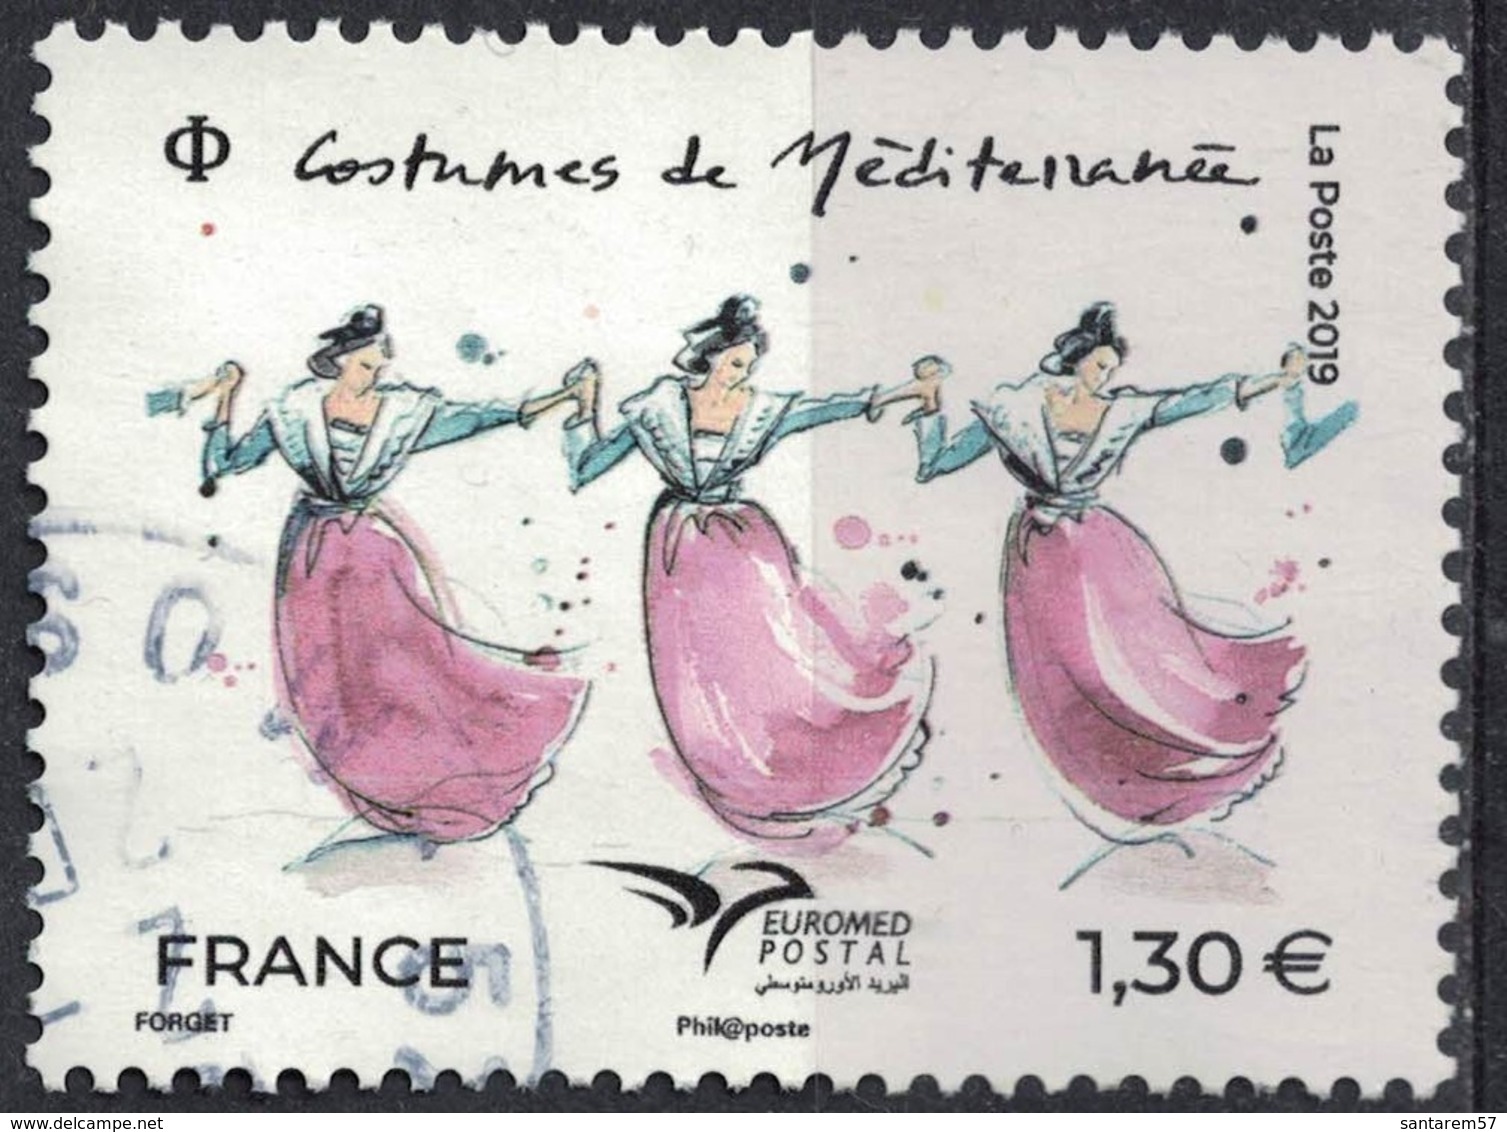 France 2019 Oblitéré Rond Used Euromed Postal Costumes De Méditerranée SU - Usati